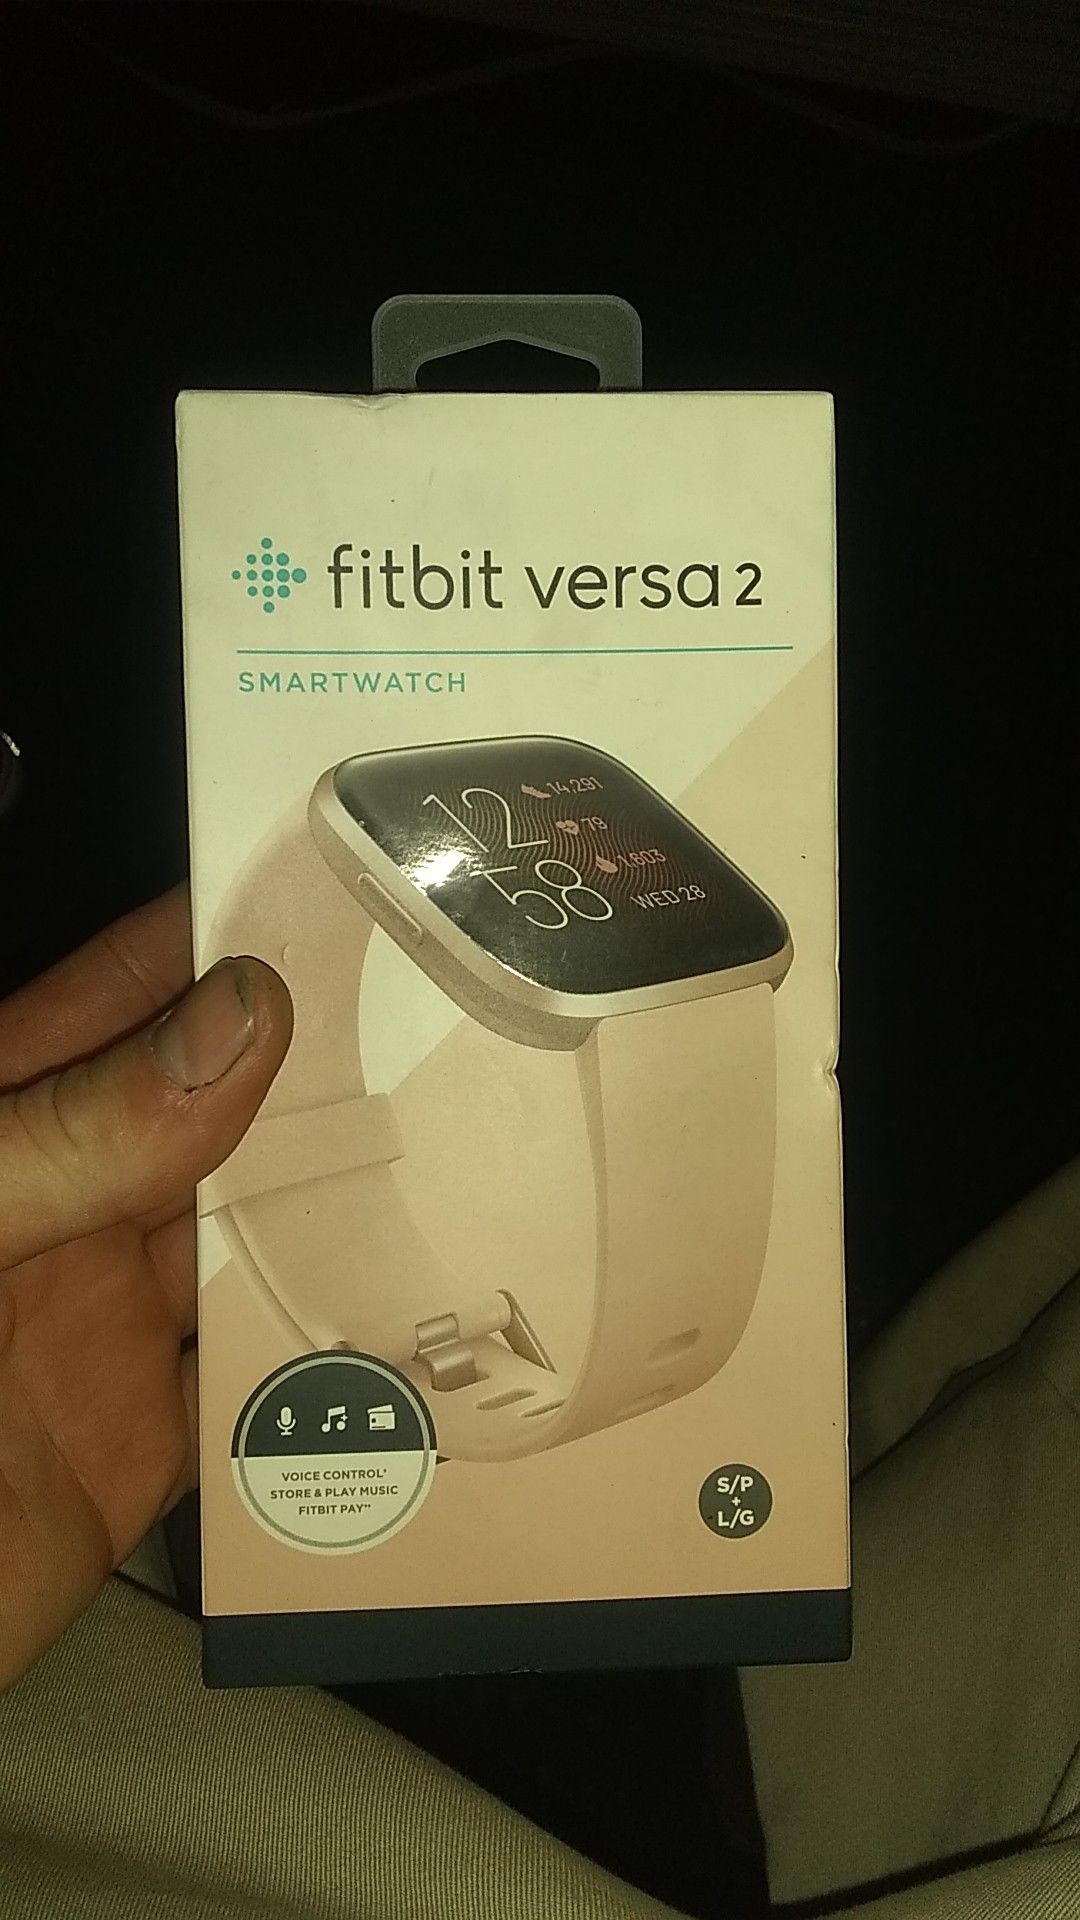 Brand new pink Fitbit Versa 2